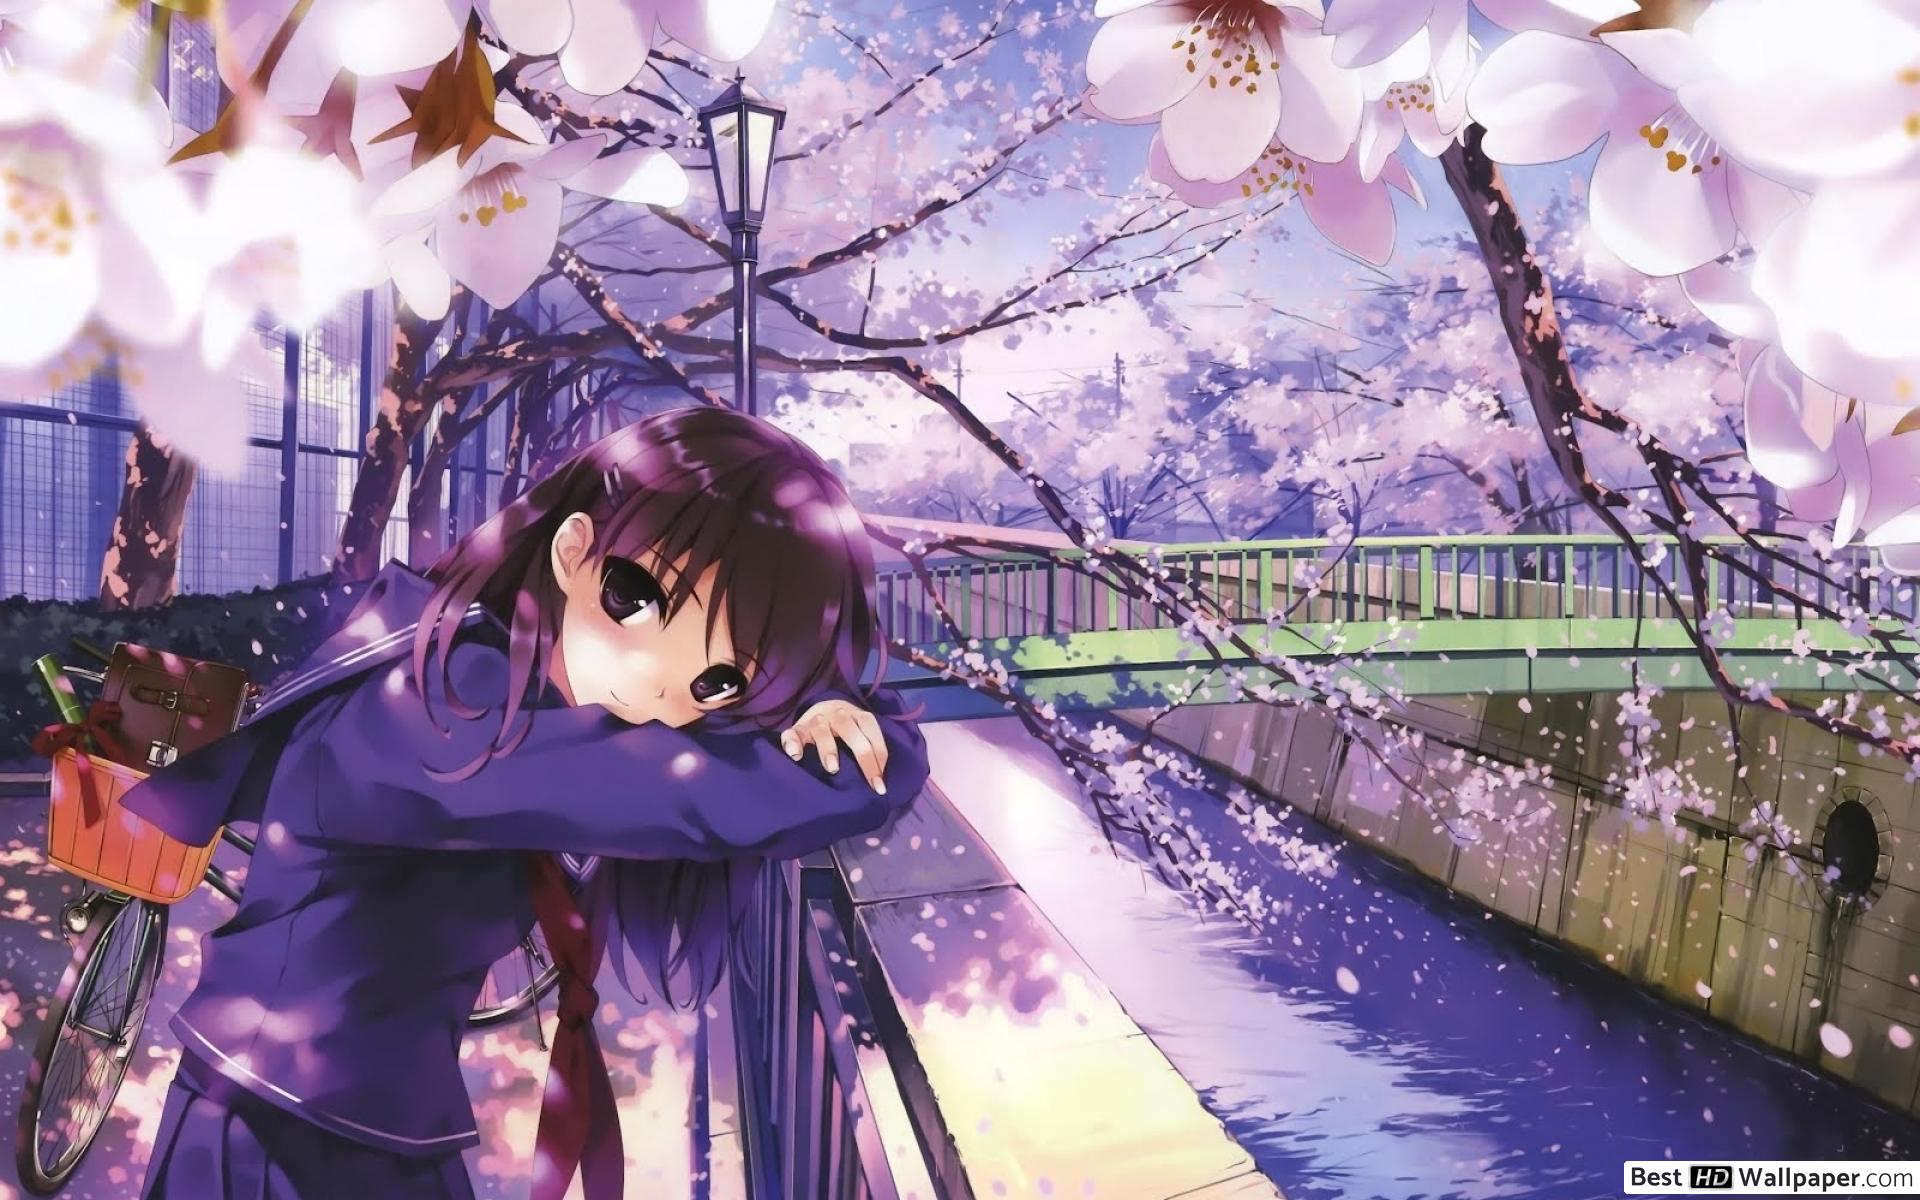 Anime Girl spring HD wallpaper download